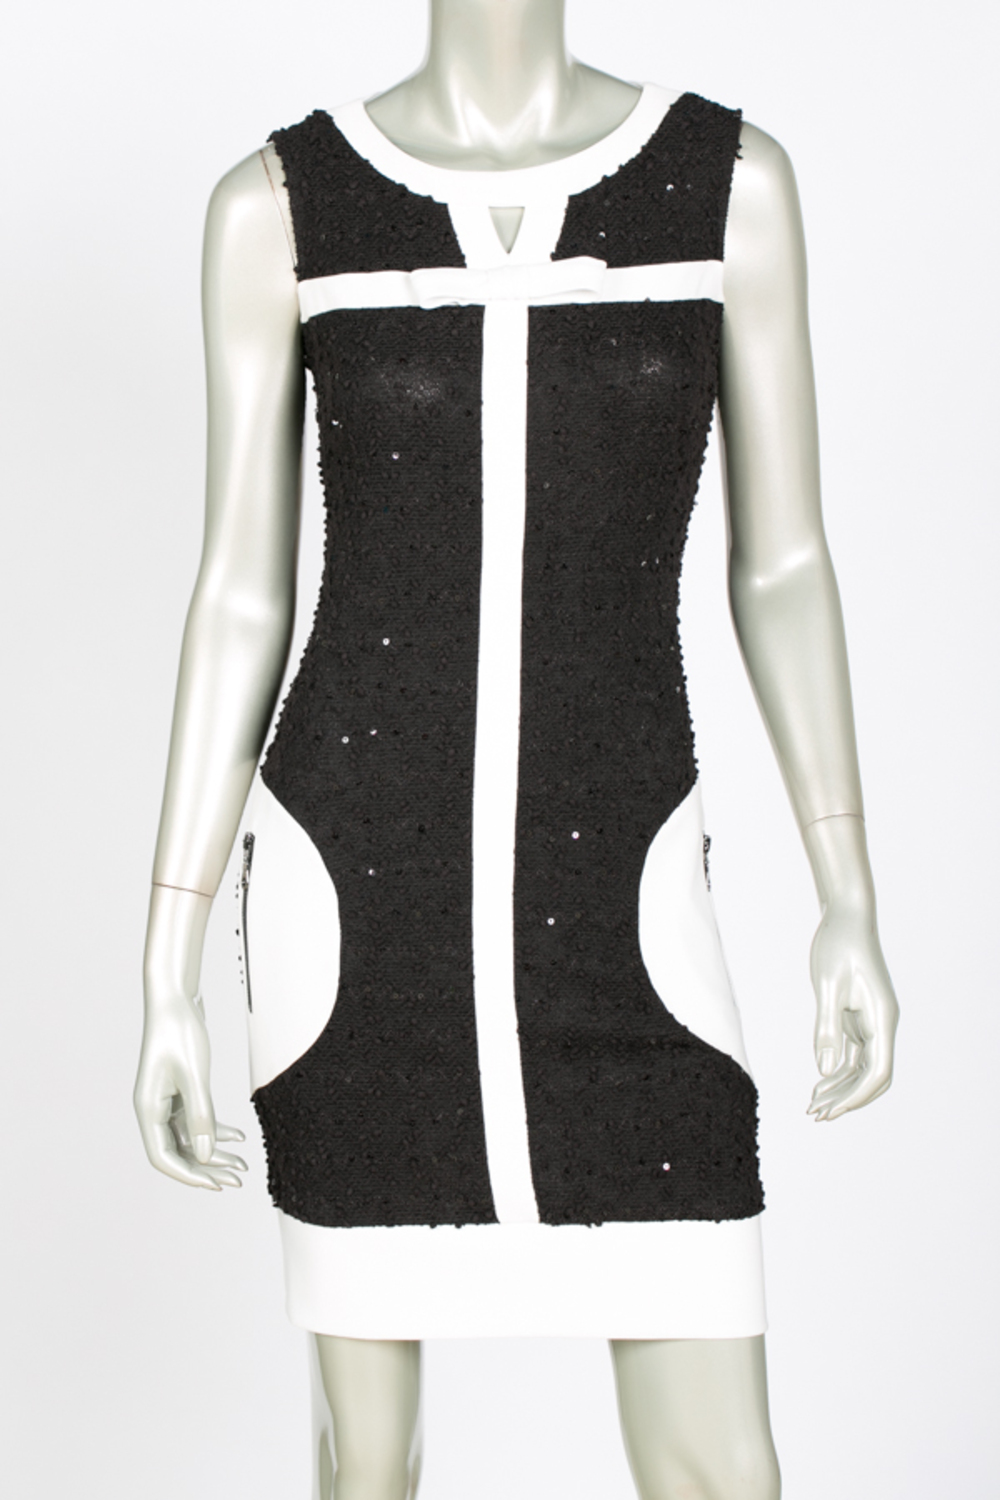 Joseph Ribkoff tunic/dress style 144584. Black/vanilla